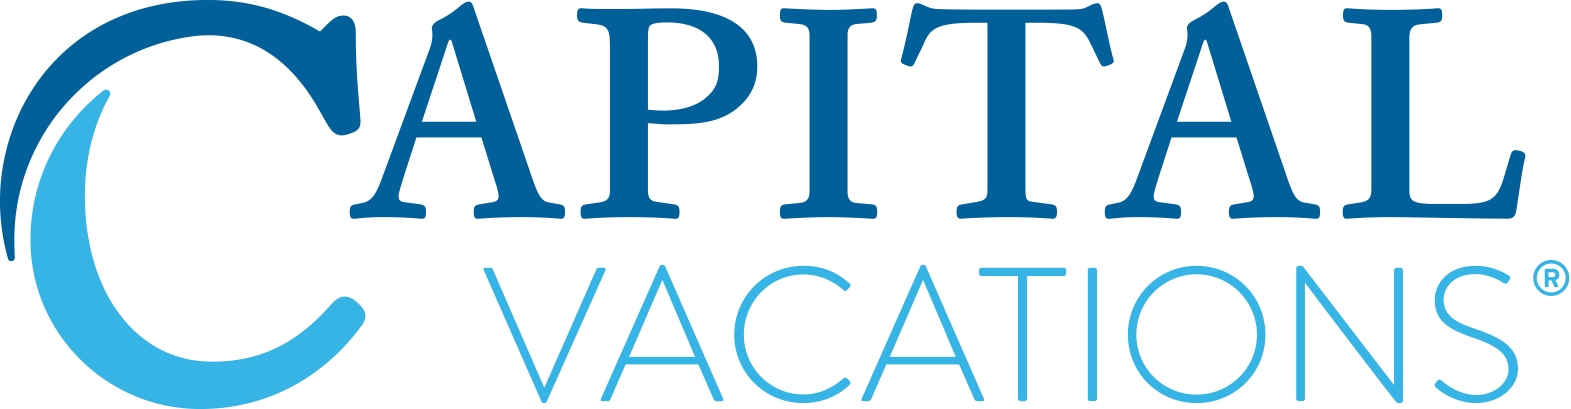 Capital Resorts group LLC dba Capital Vacations